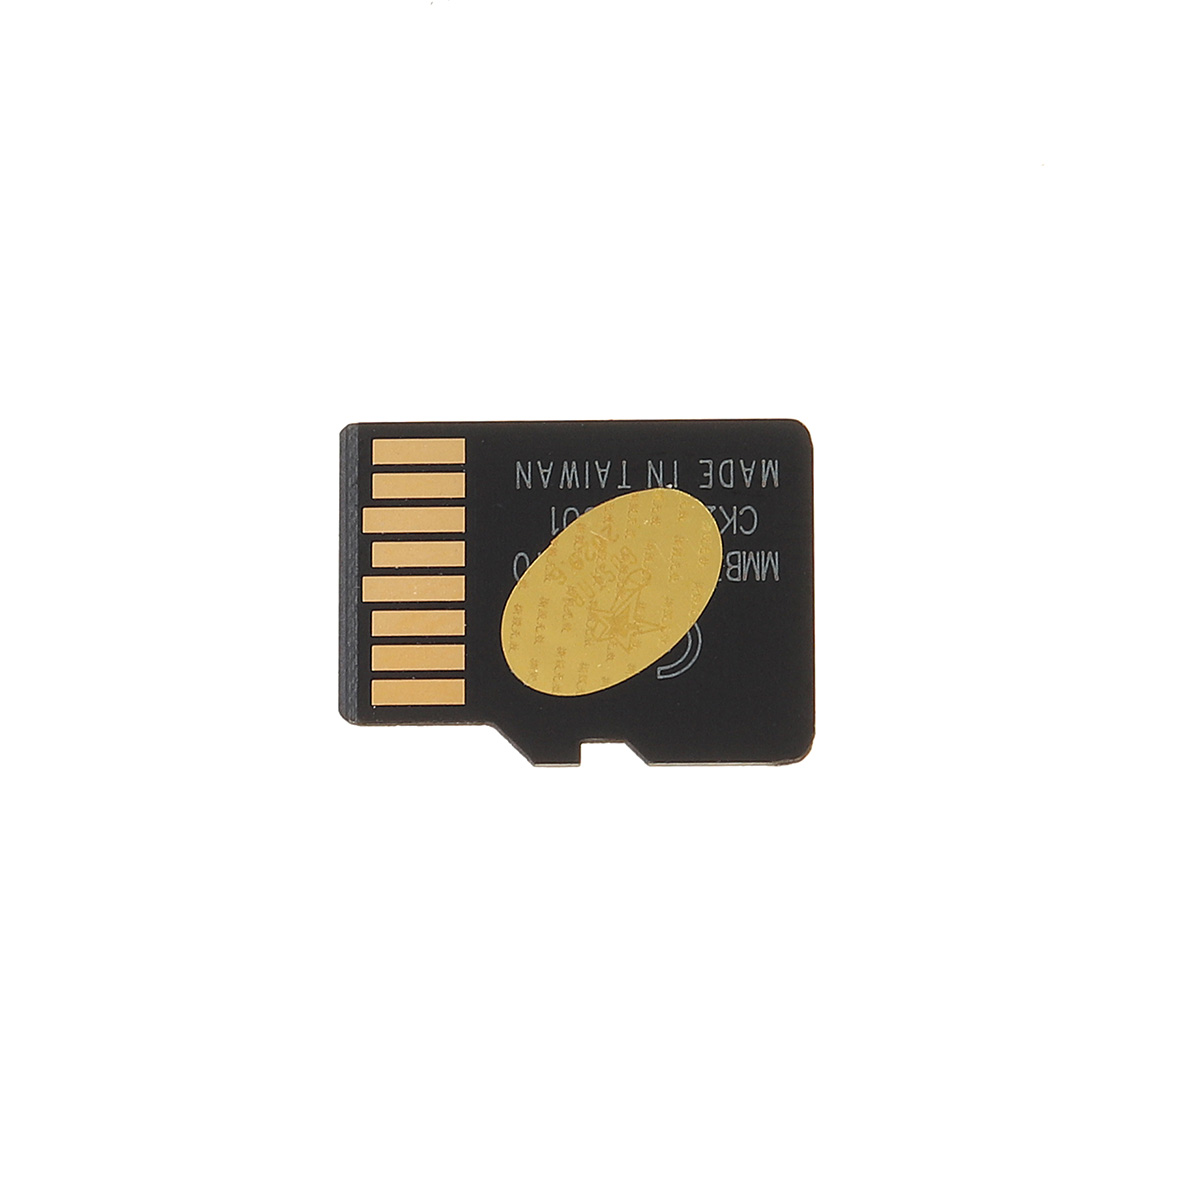 16GB-32GB-64GB-Mini-TF-Card-Memory-Card-for-MobIile-Phone-Digital-Camera-1705971